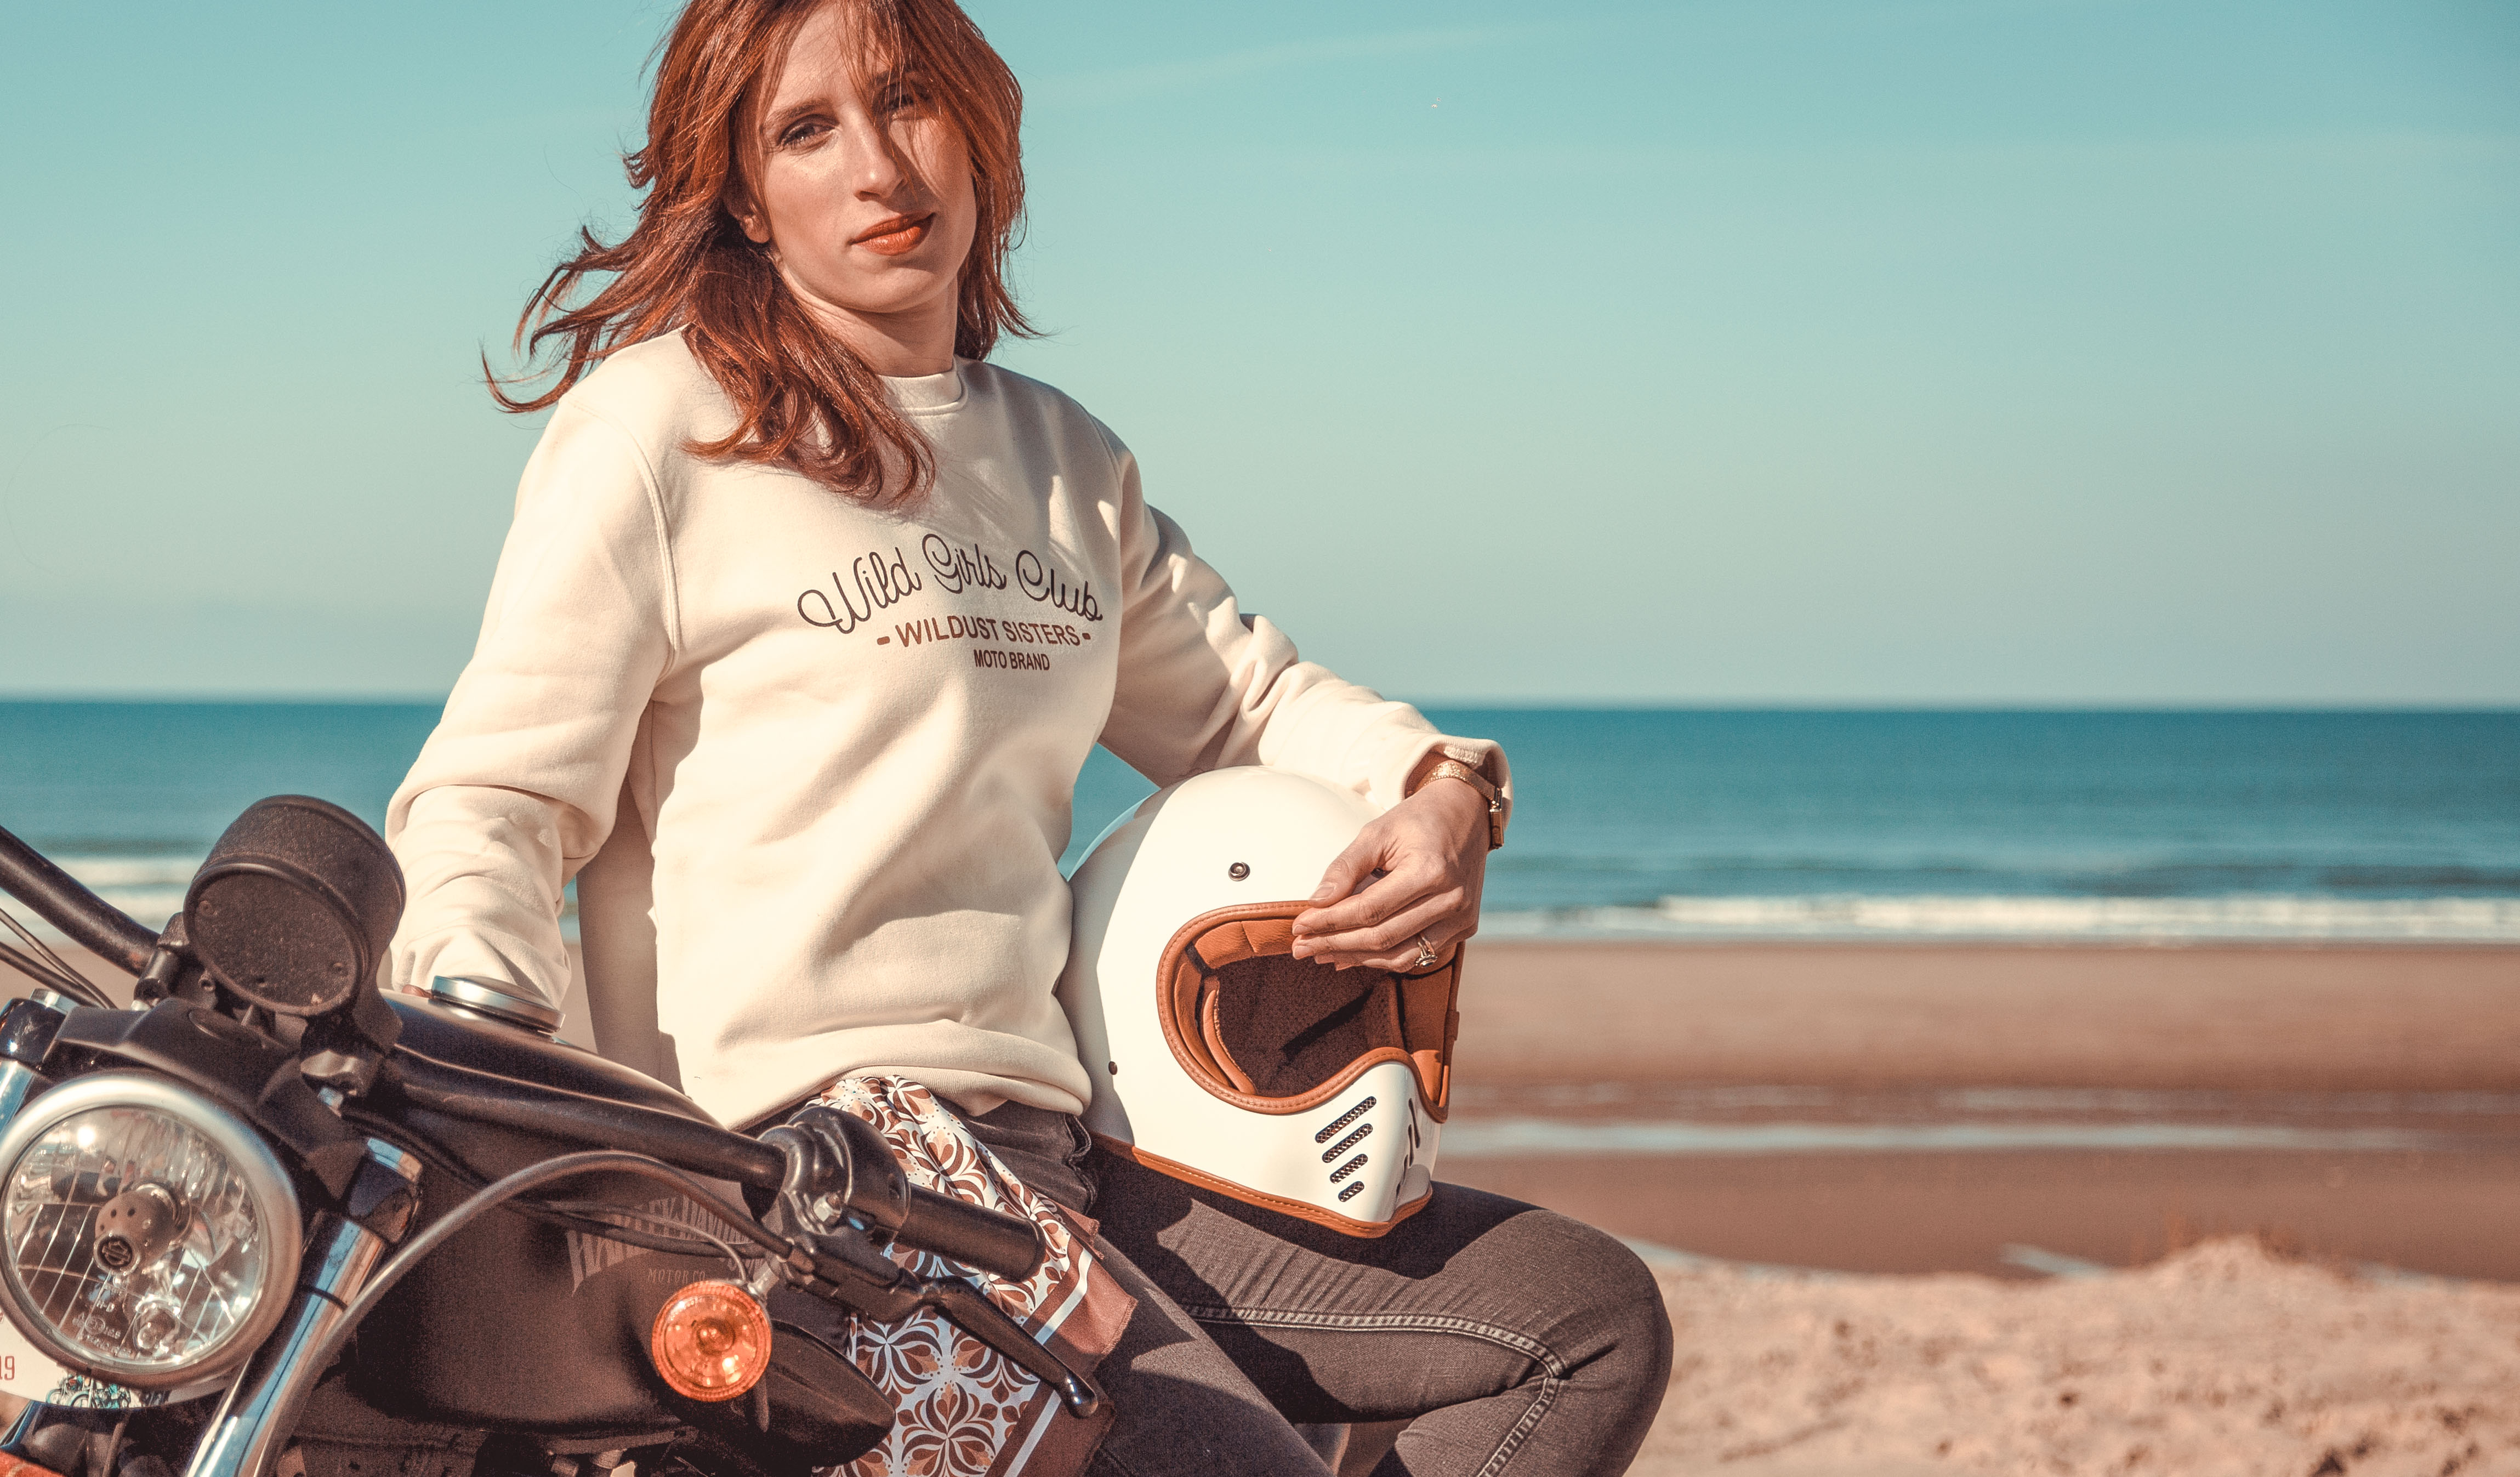 motogirl with wildust sweatshirt